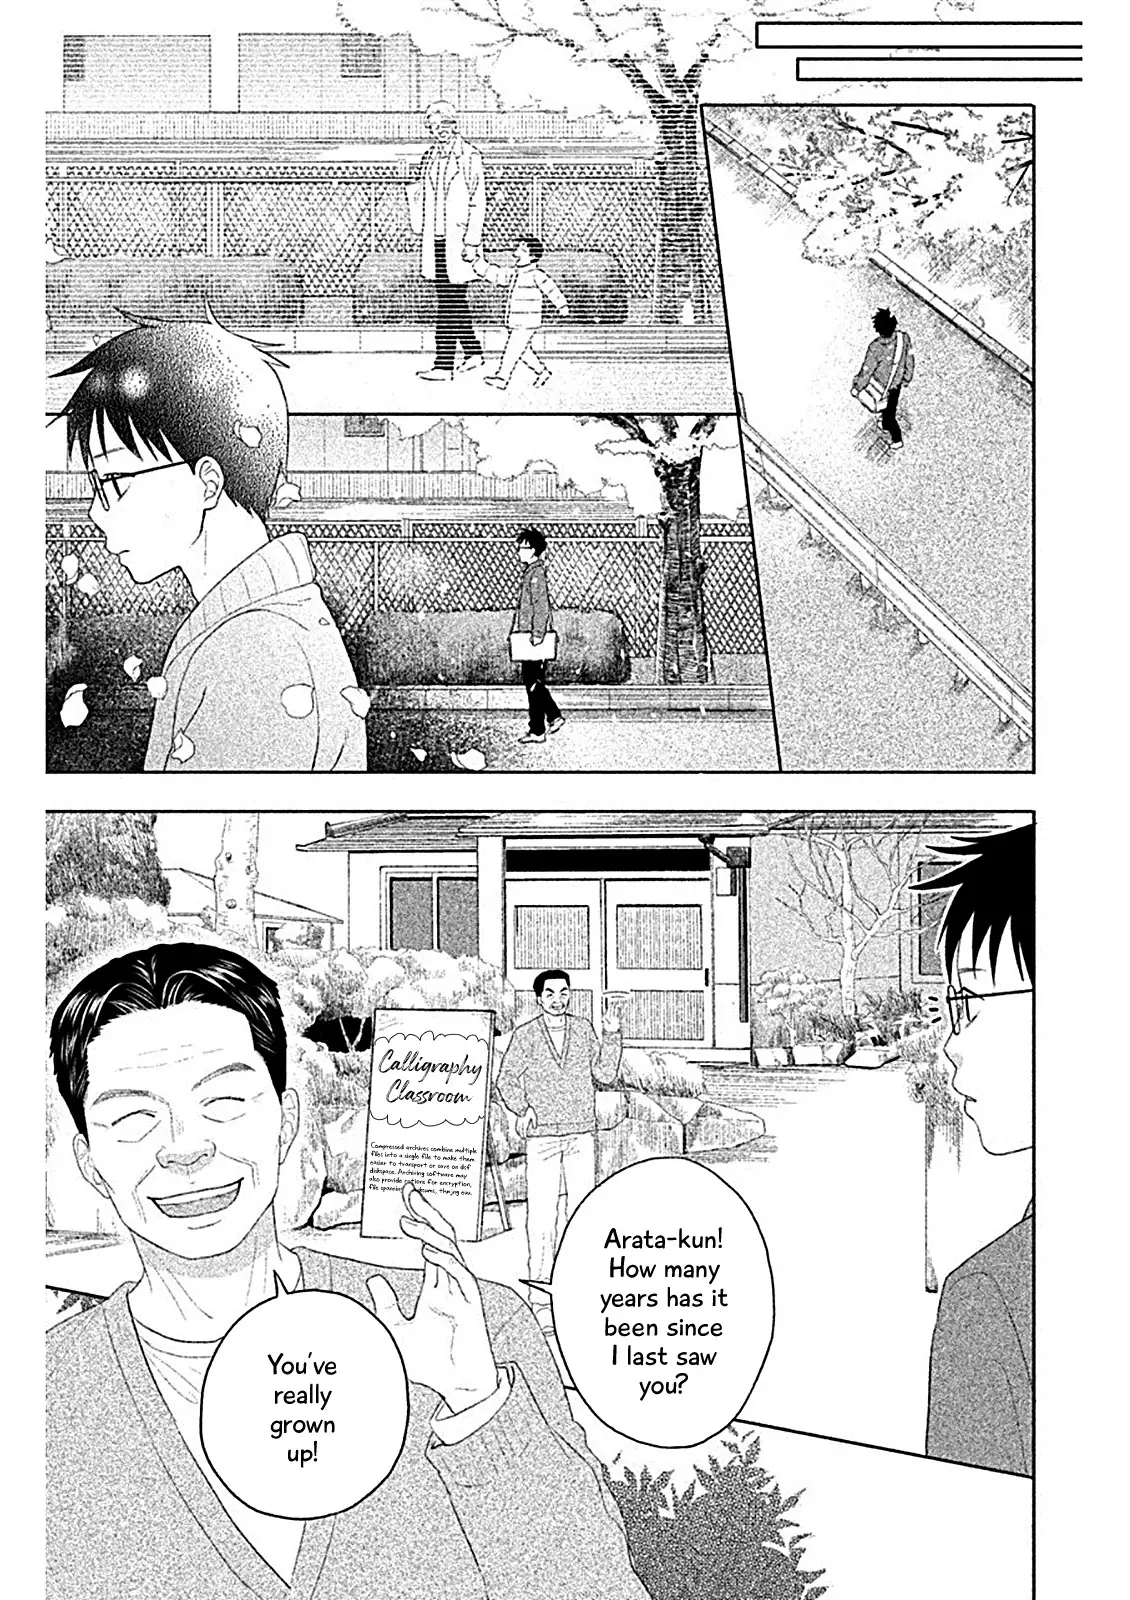 Chihayafuru: Middle School Arc - 6 page 16